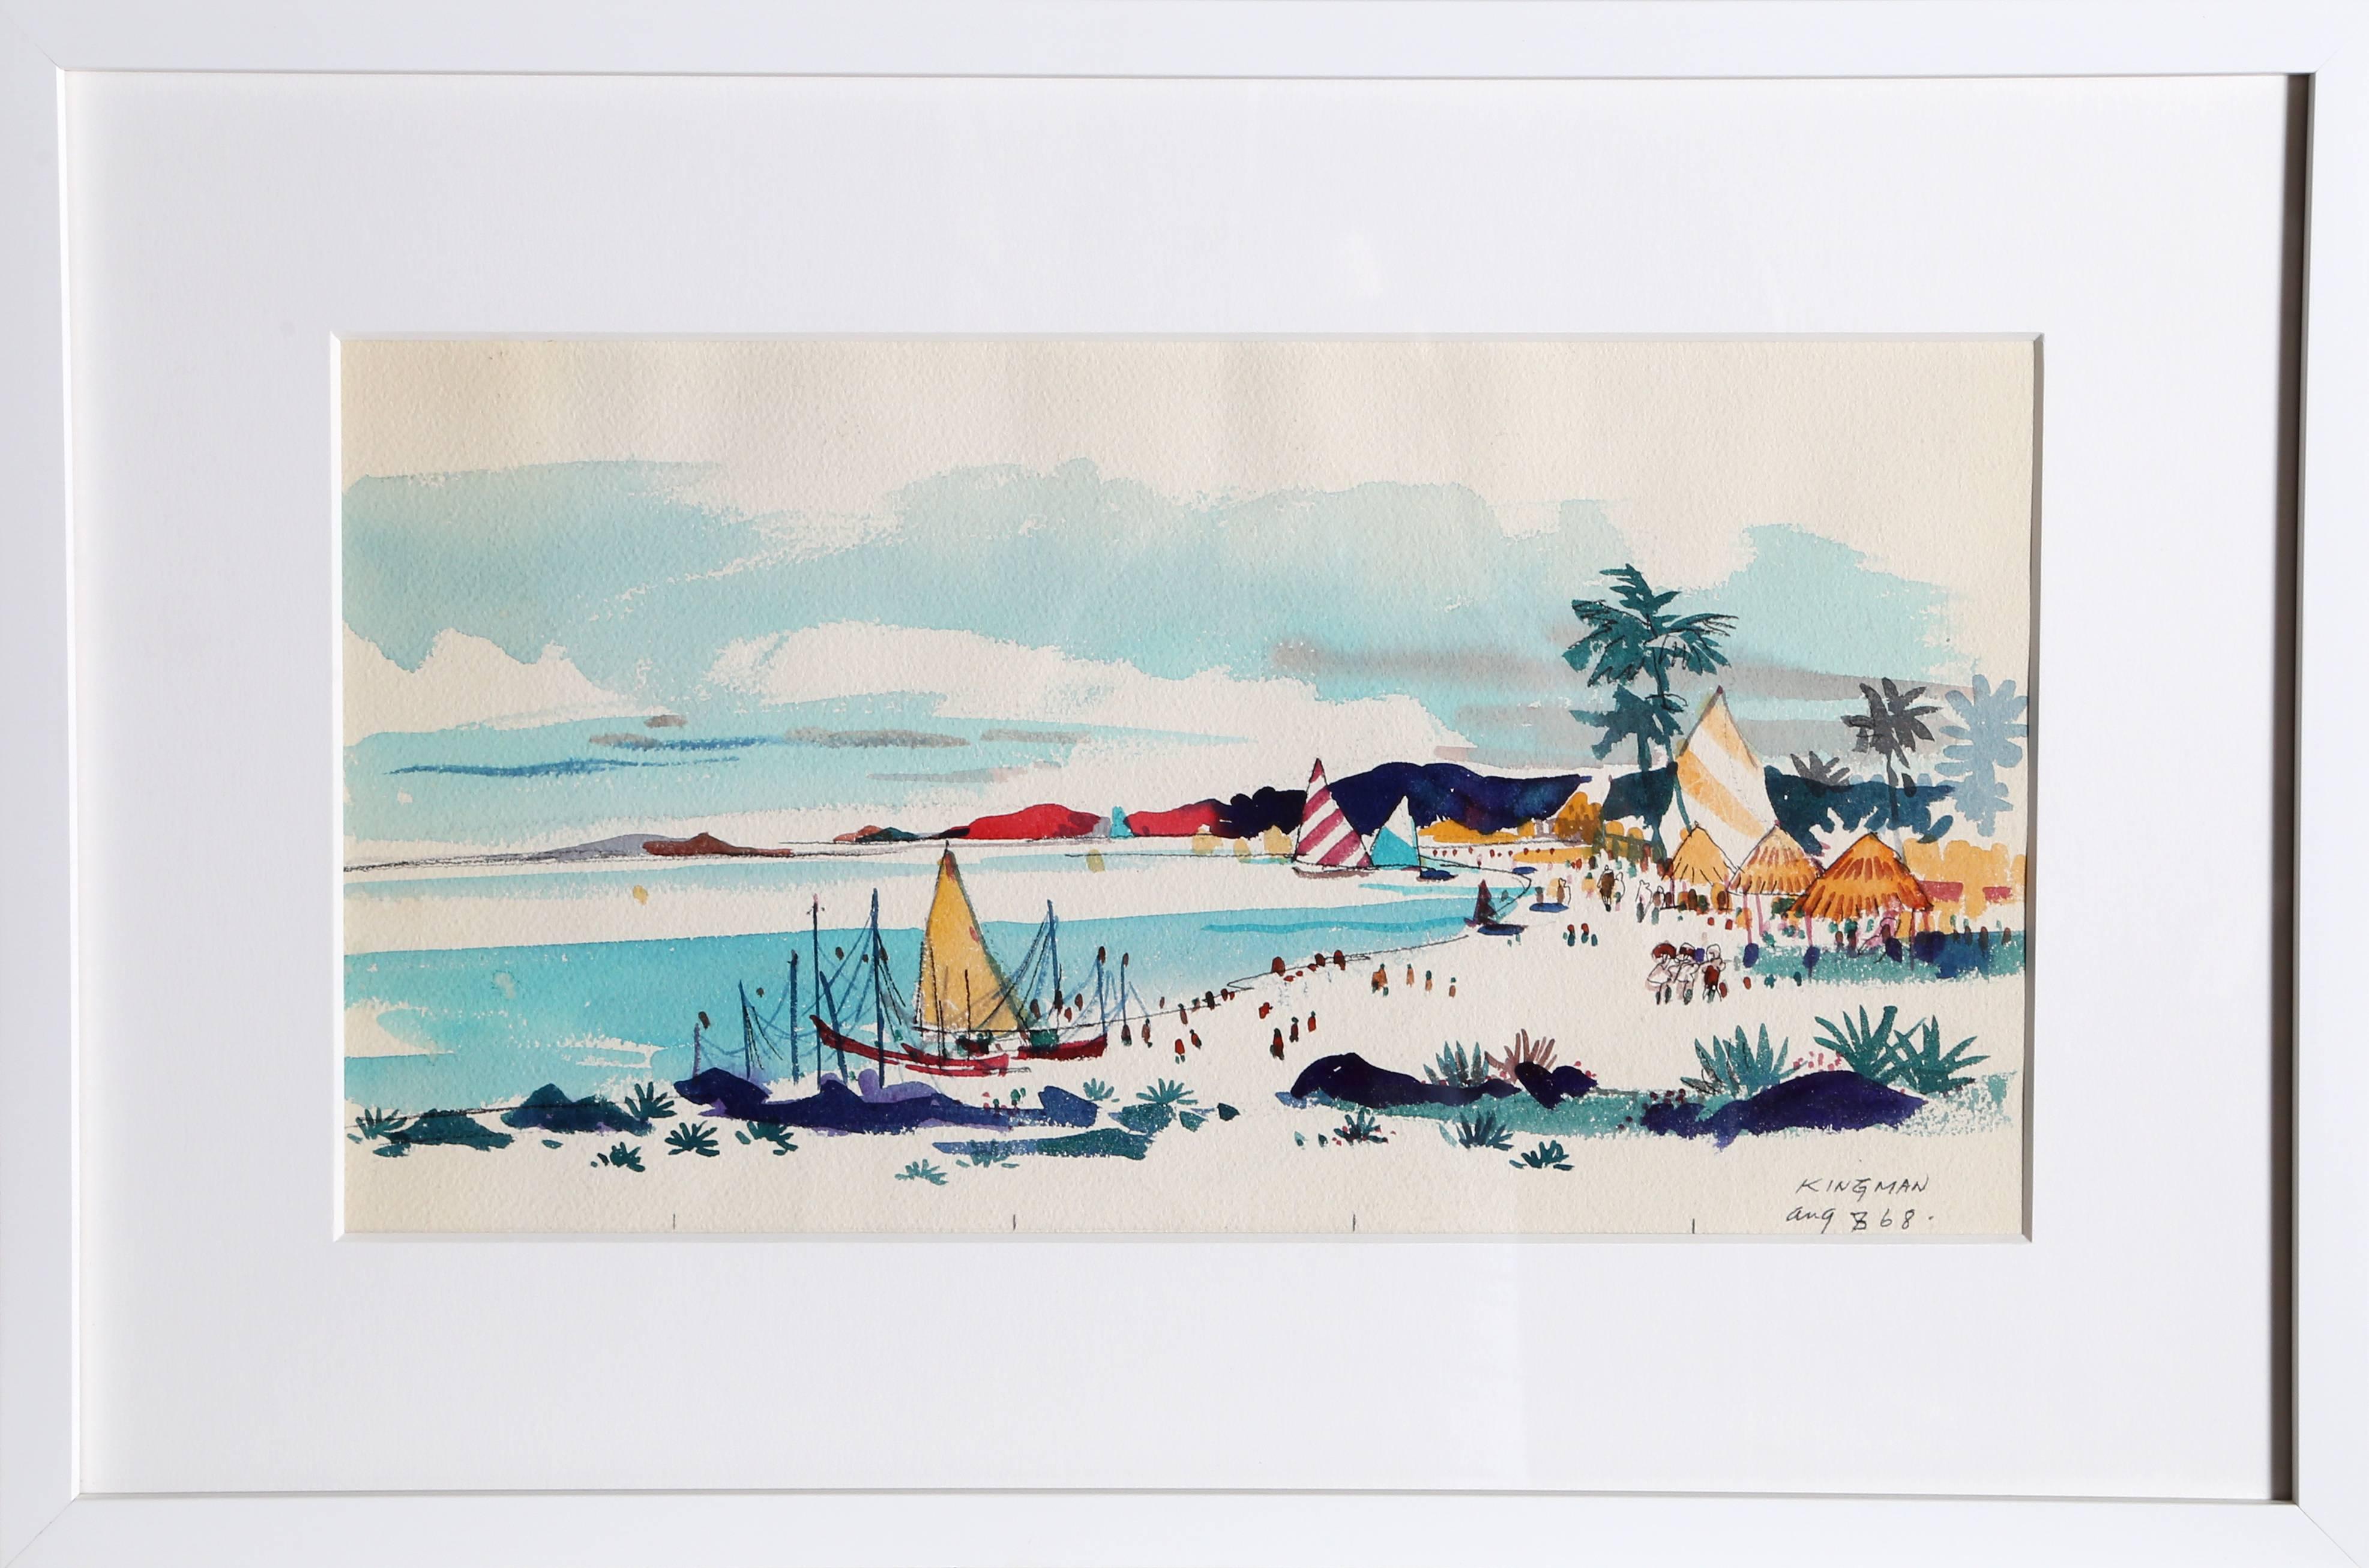 Künstler:	Dong Moy Chu Kingman, Chinesin/Amerikanerin (1911 - 2000)
Titel:	Acapulco-Strand-Szene I
Jahr:	1968
Medium:	Aquarell, signiert und datiert v.l.n.r.
Größe:	10,5 x 18 auf 13,5 x 20,5 Zoll
Rahmen: 17 x 26 Zoll